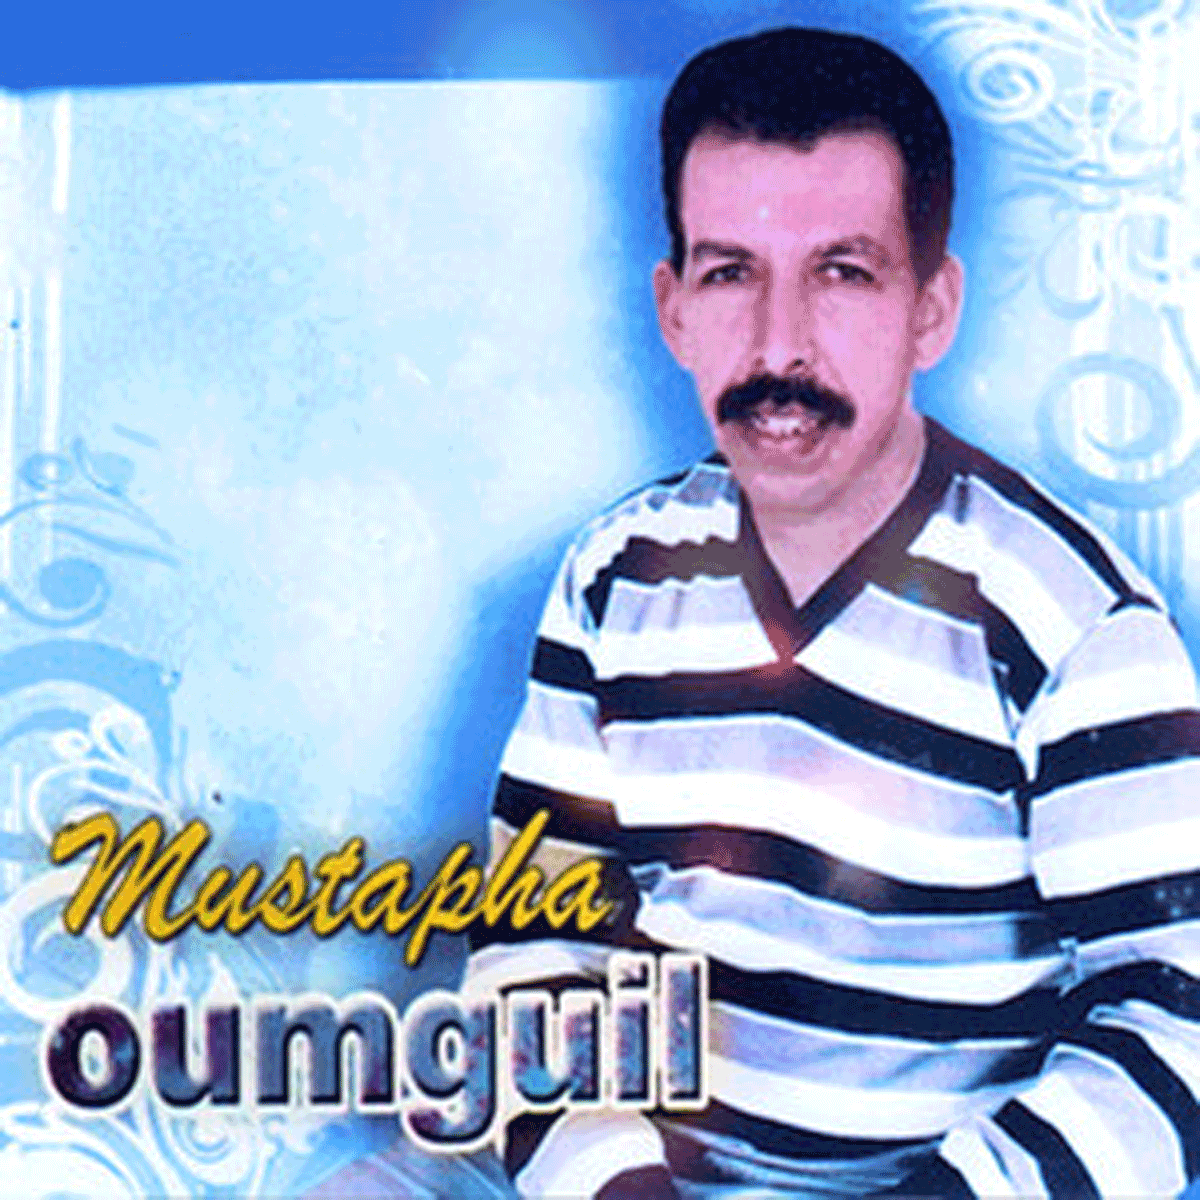 Mustapha oumguil mp3